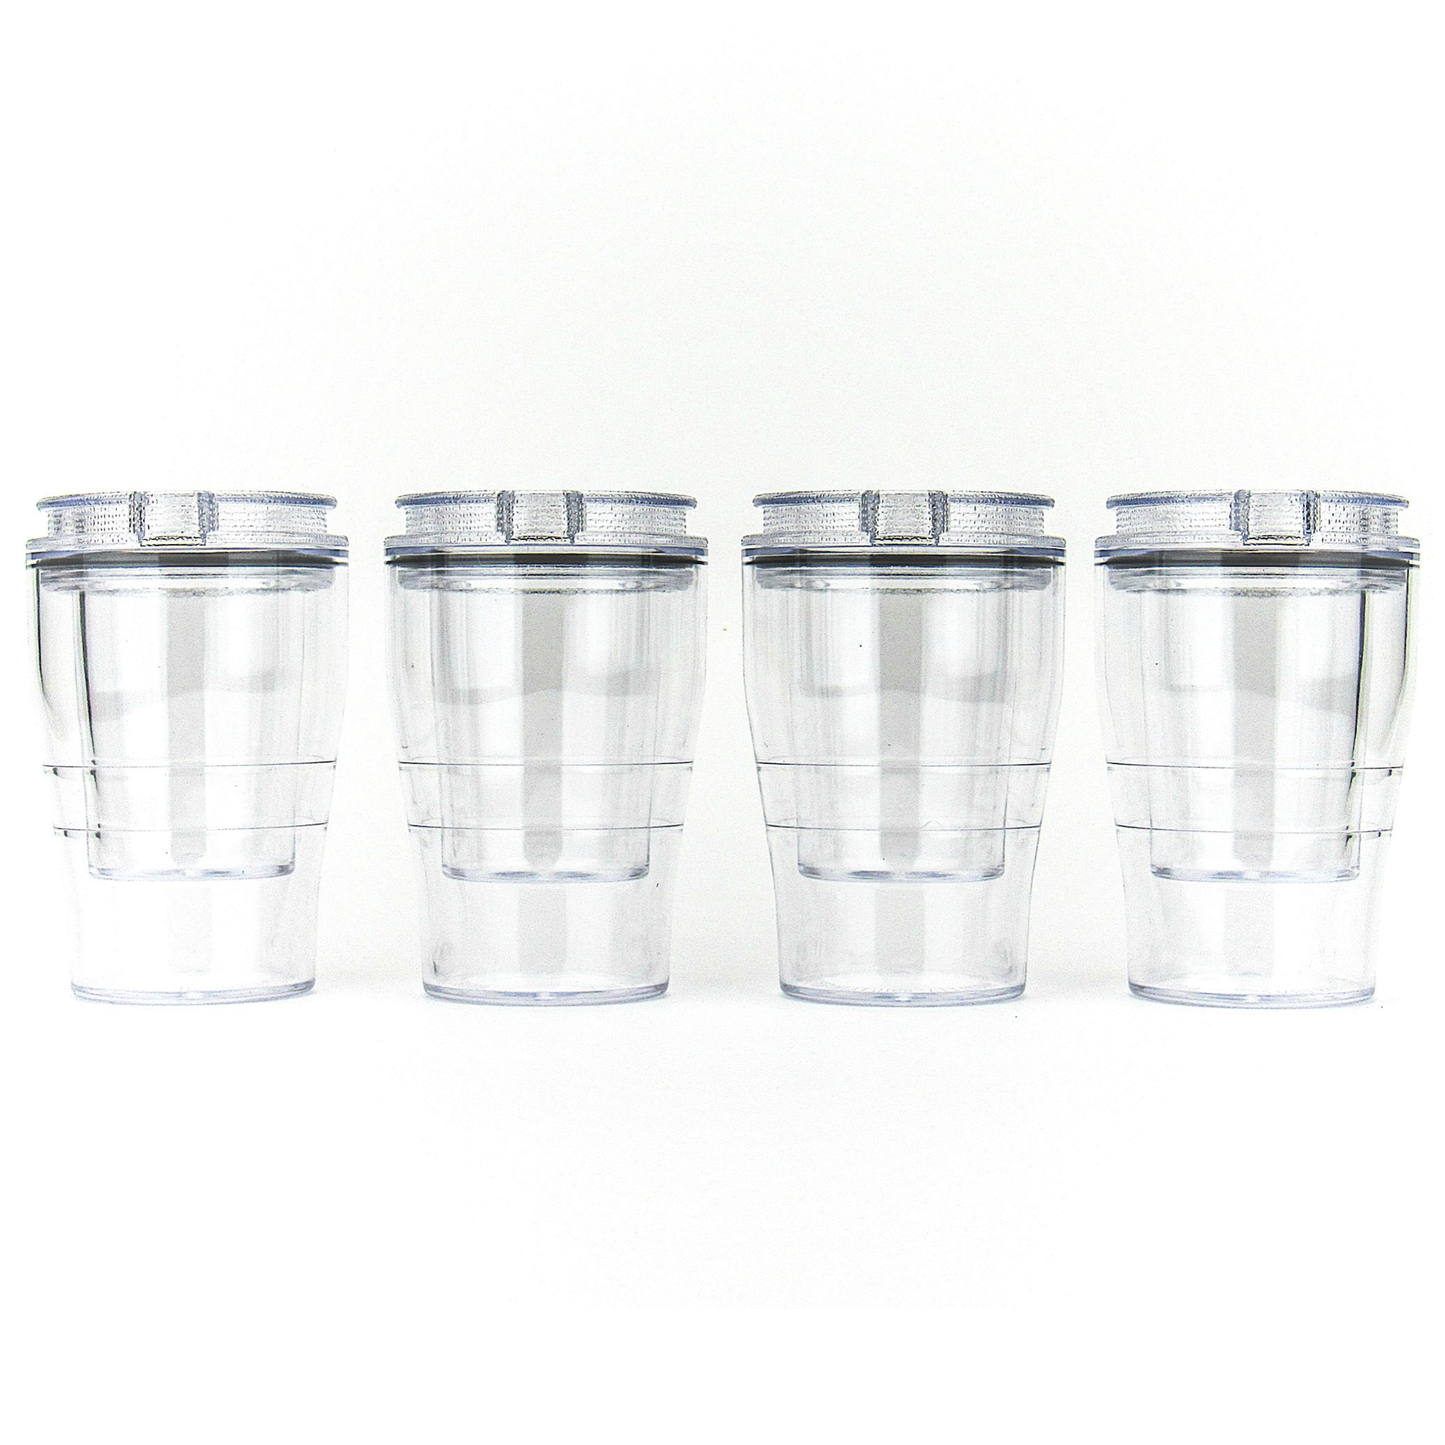 DoubleTake Shot Glass (Clear) - 4 Pack